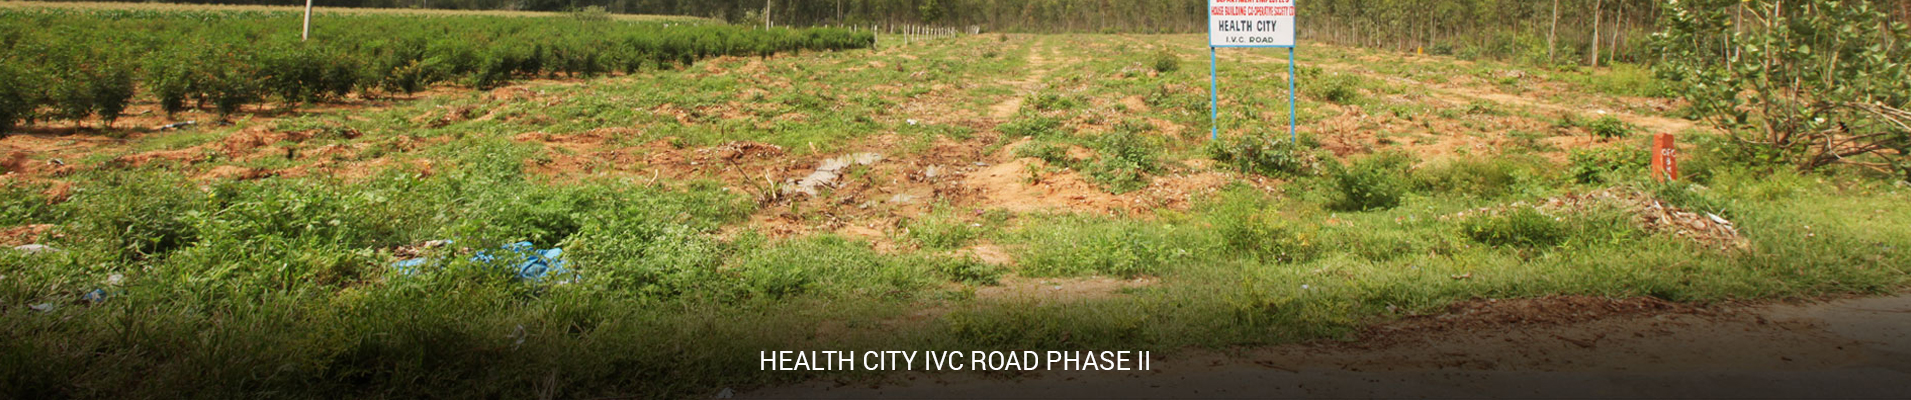 Health City IVC Road Phase II